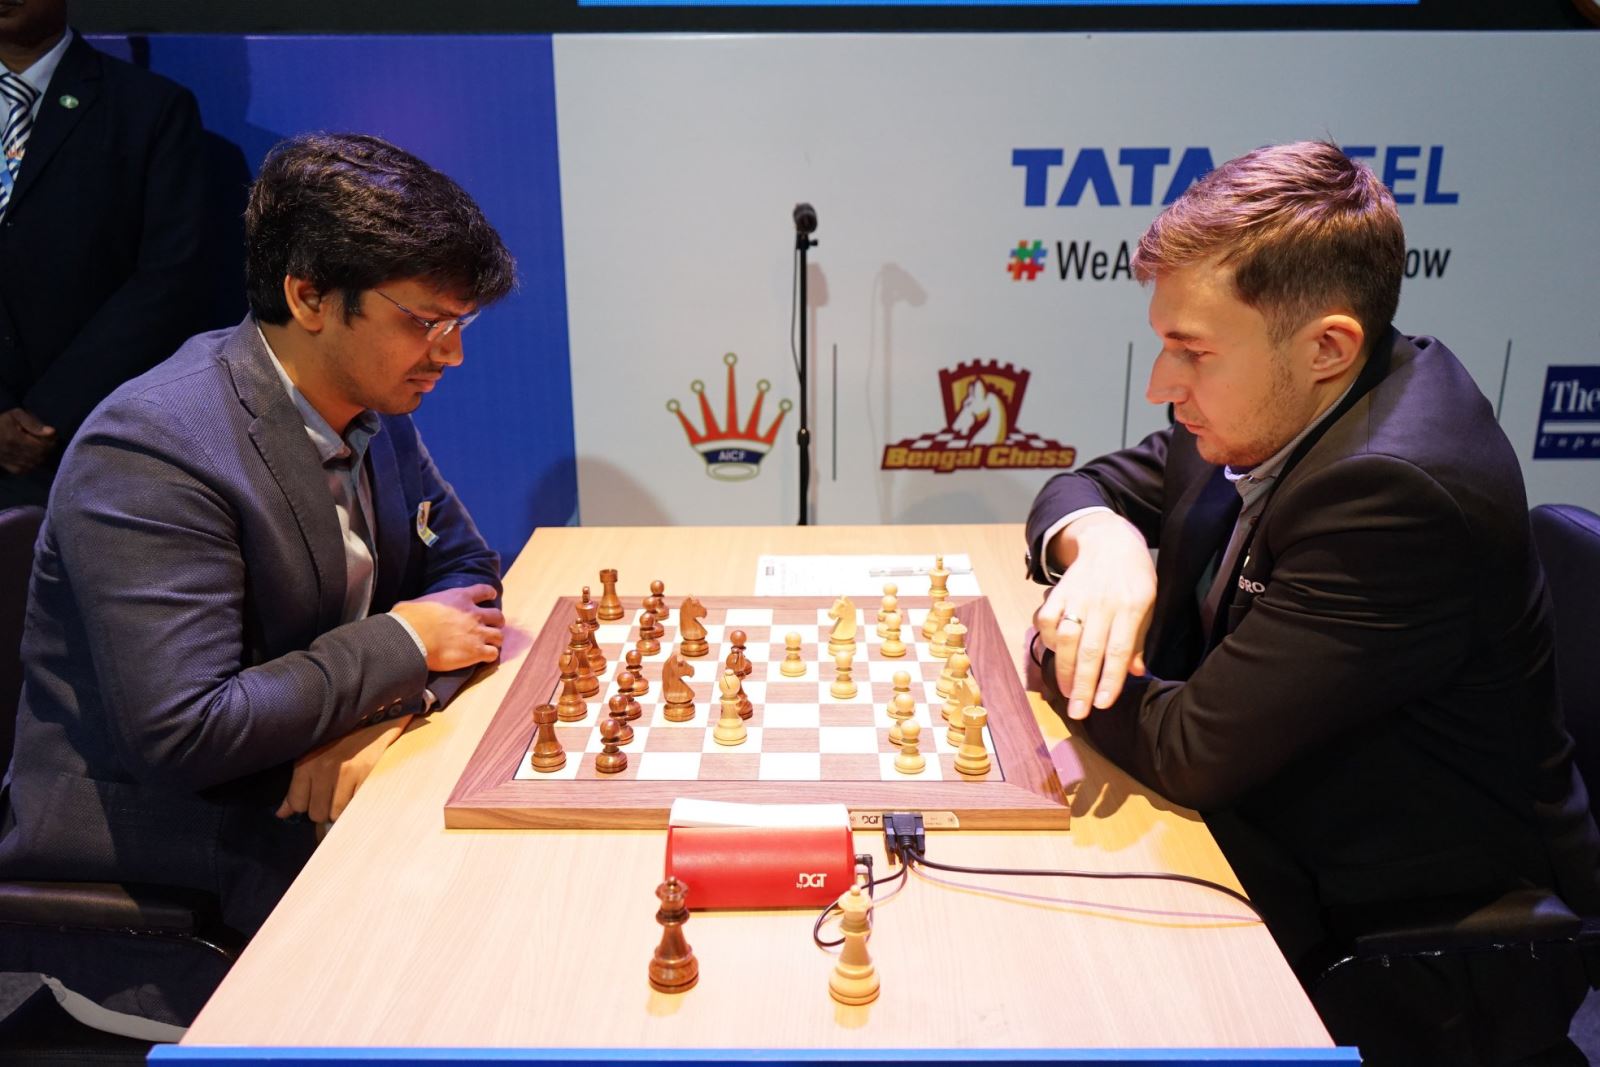 Hari finishes second, Nakamura reigns supreme at Tata Steel Chess